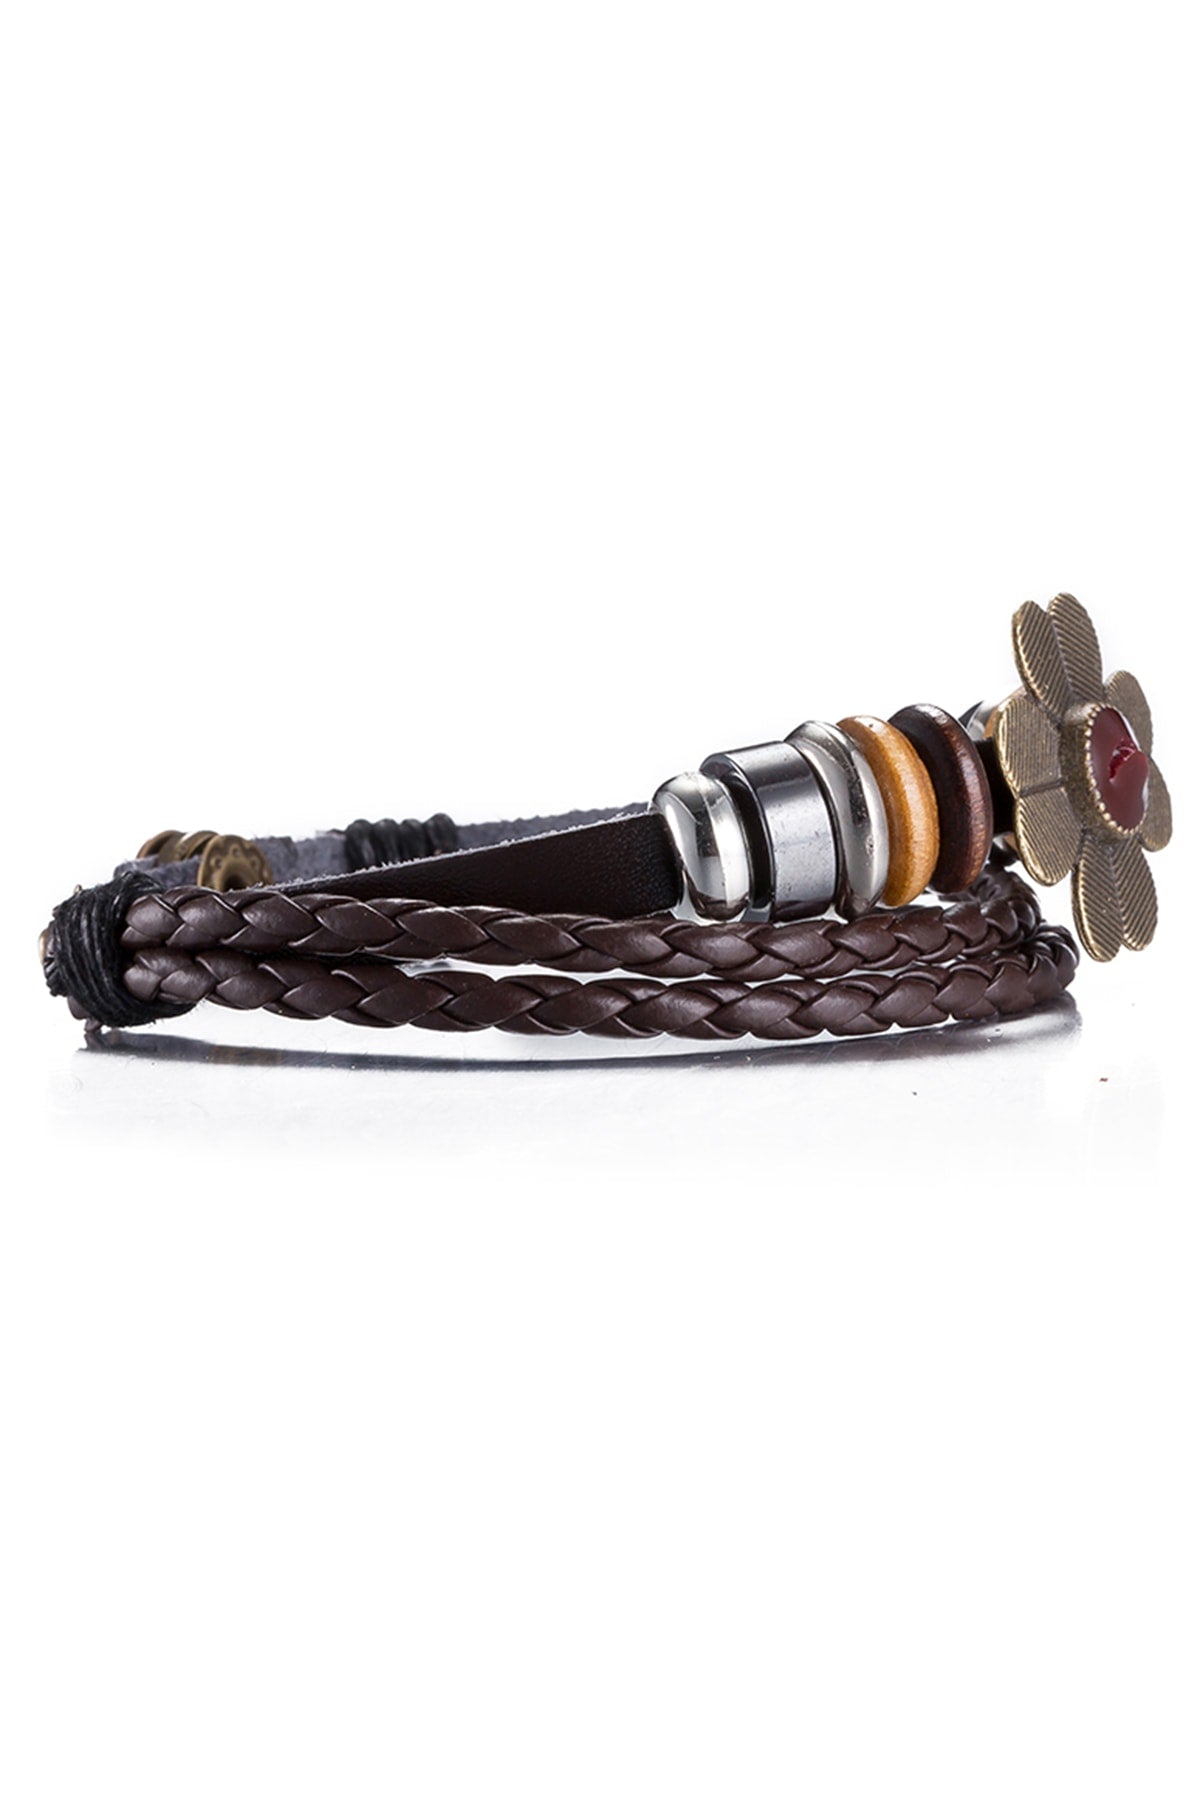 Dark Brown Flower Leather Bracelet